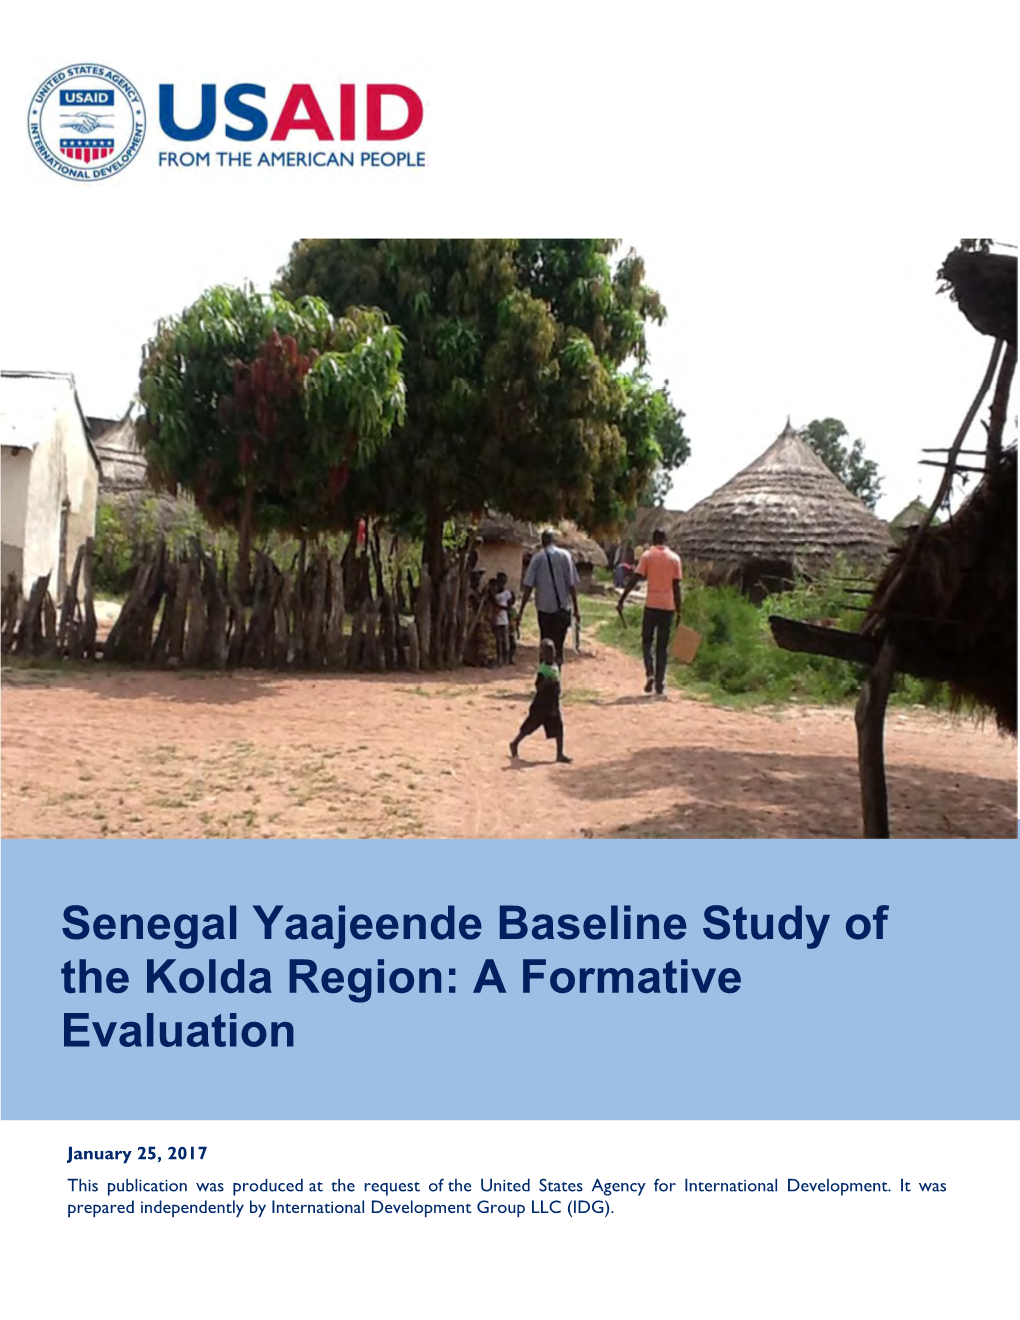 Senegal Yaajeende Baseline Study of the Kolda Region: a Formative Evaluation